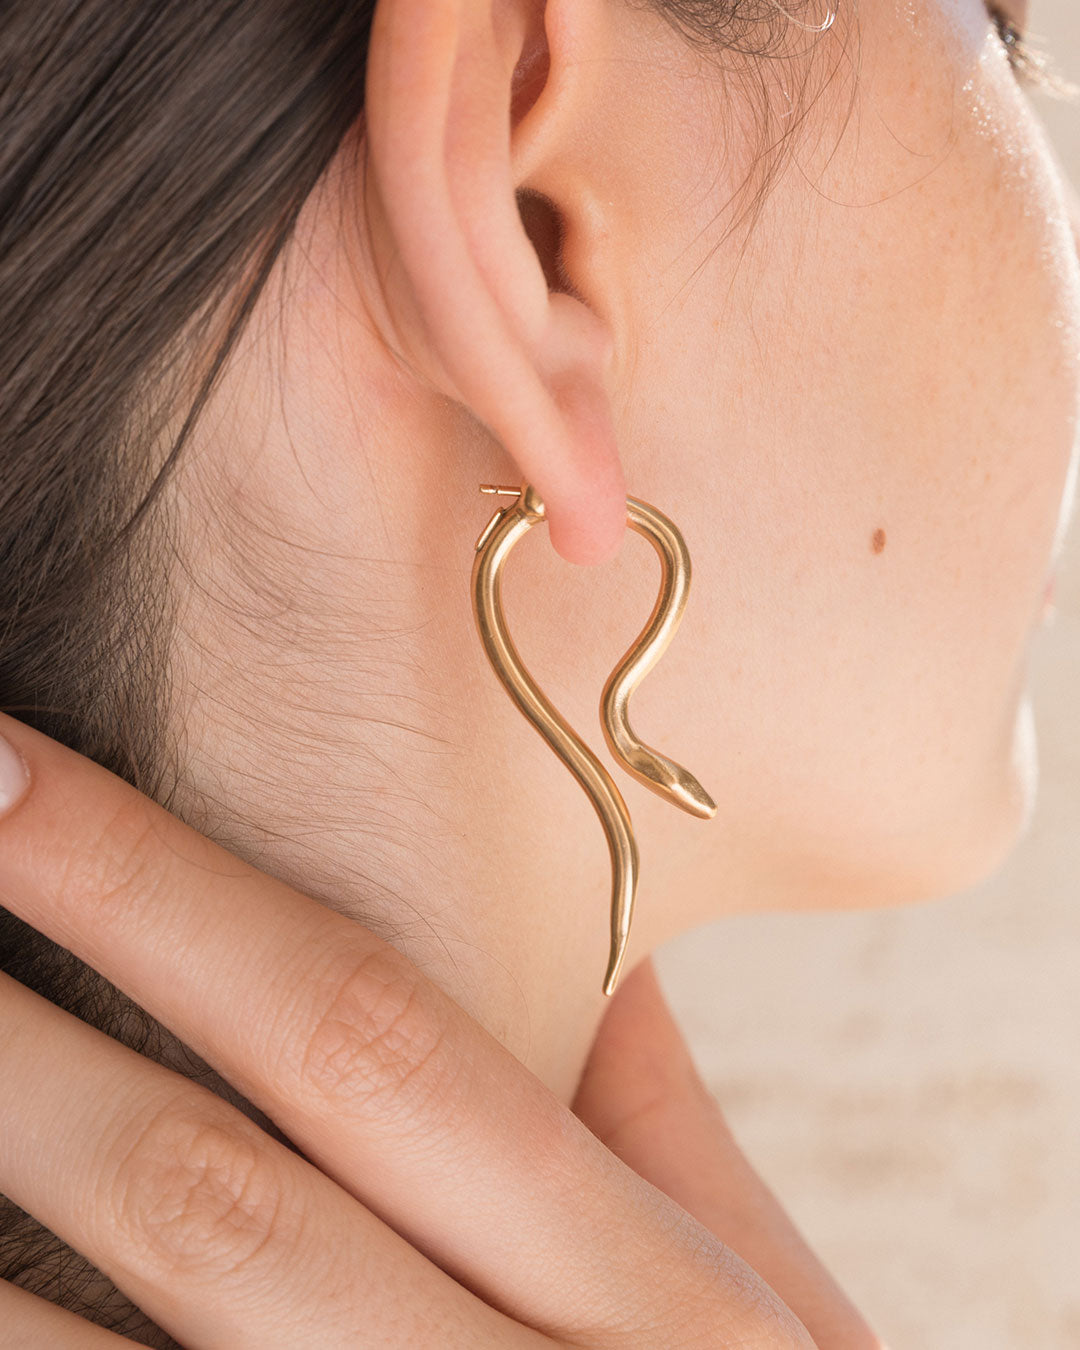 Hooked Earrings 24k gold plated bronze Giulia Barela Jewelry